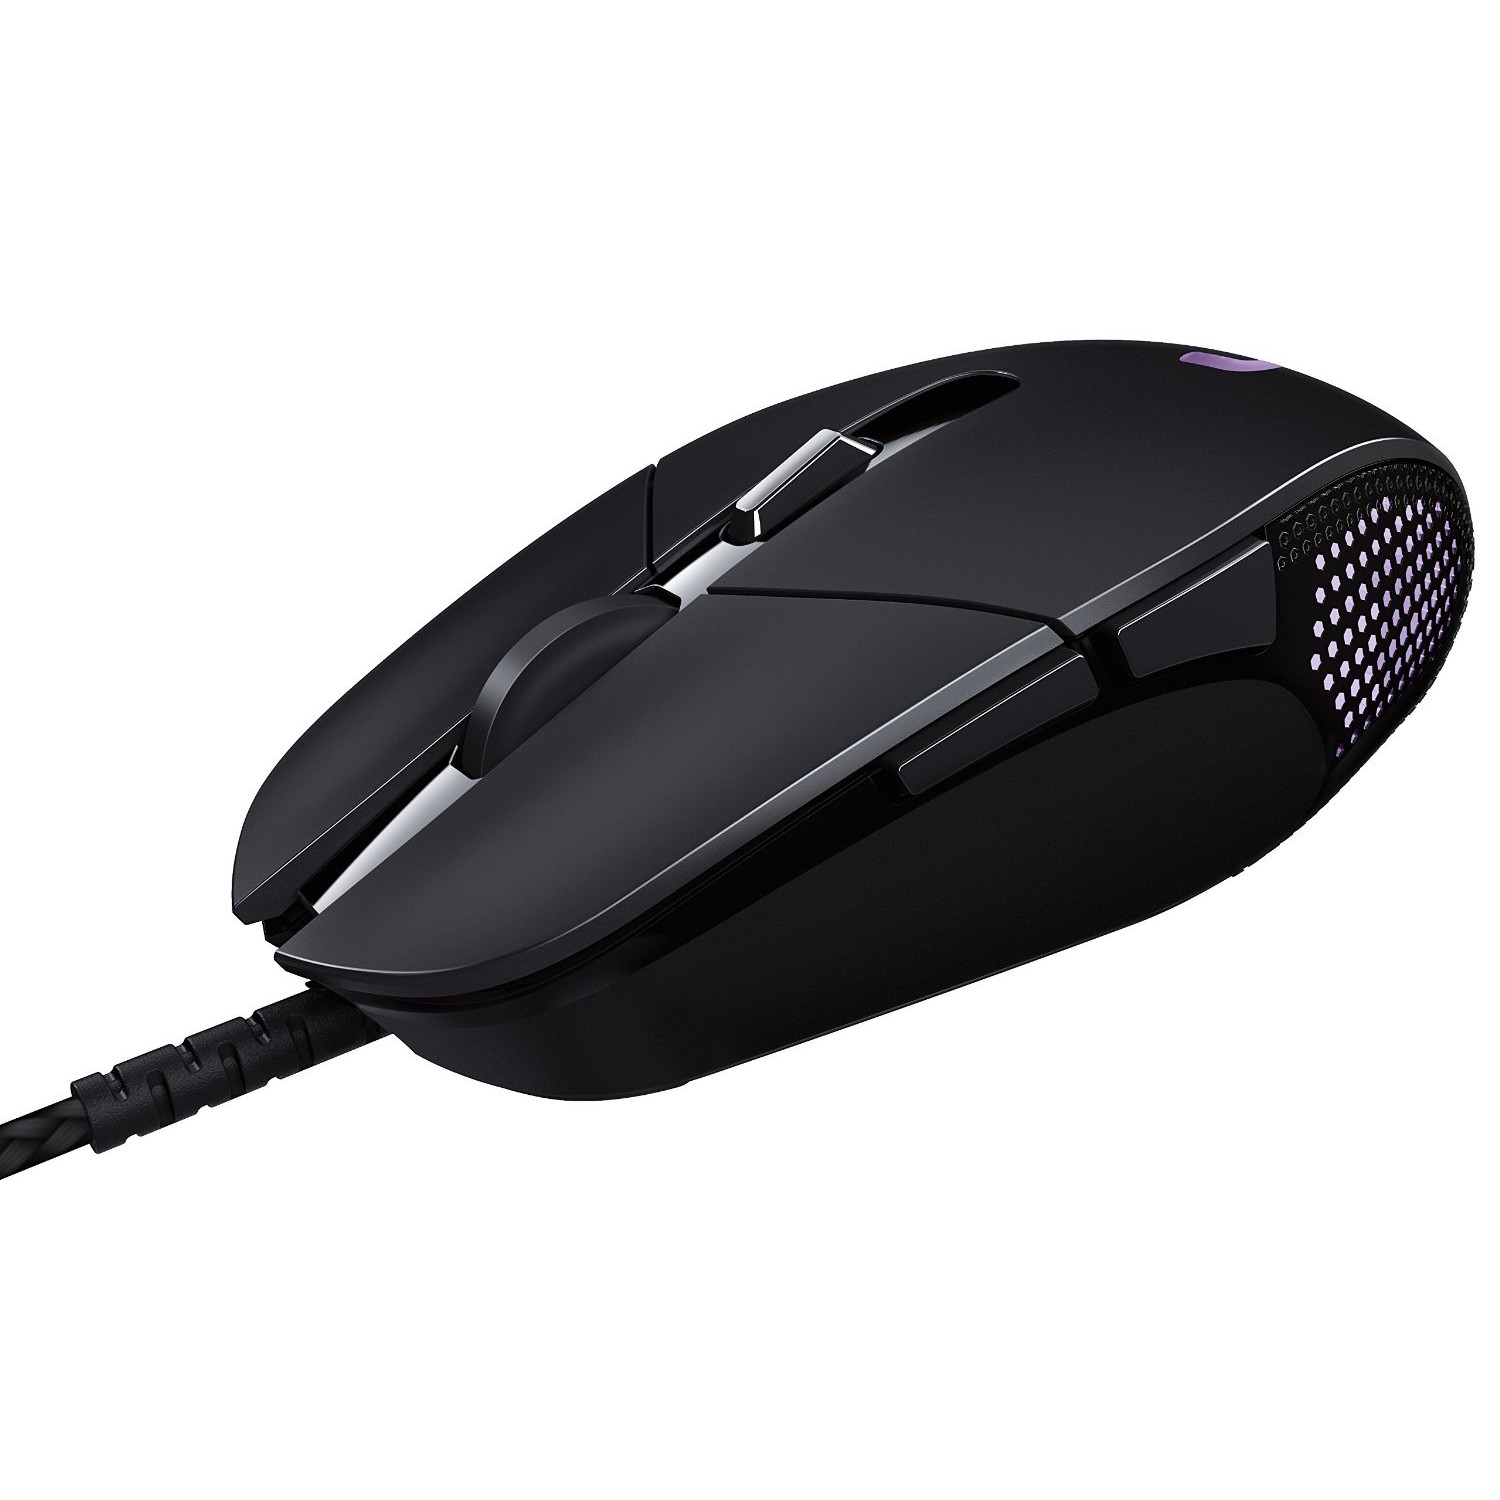 Logitech G303 Daedalus Apex Gaming Mouse-4